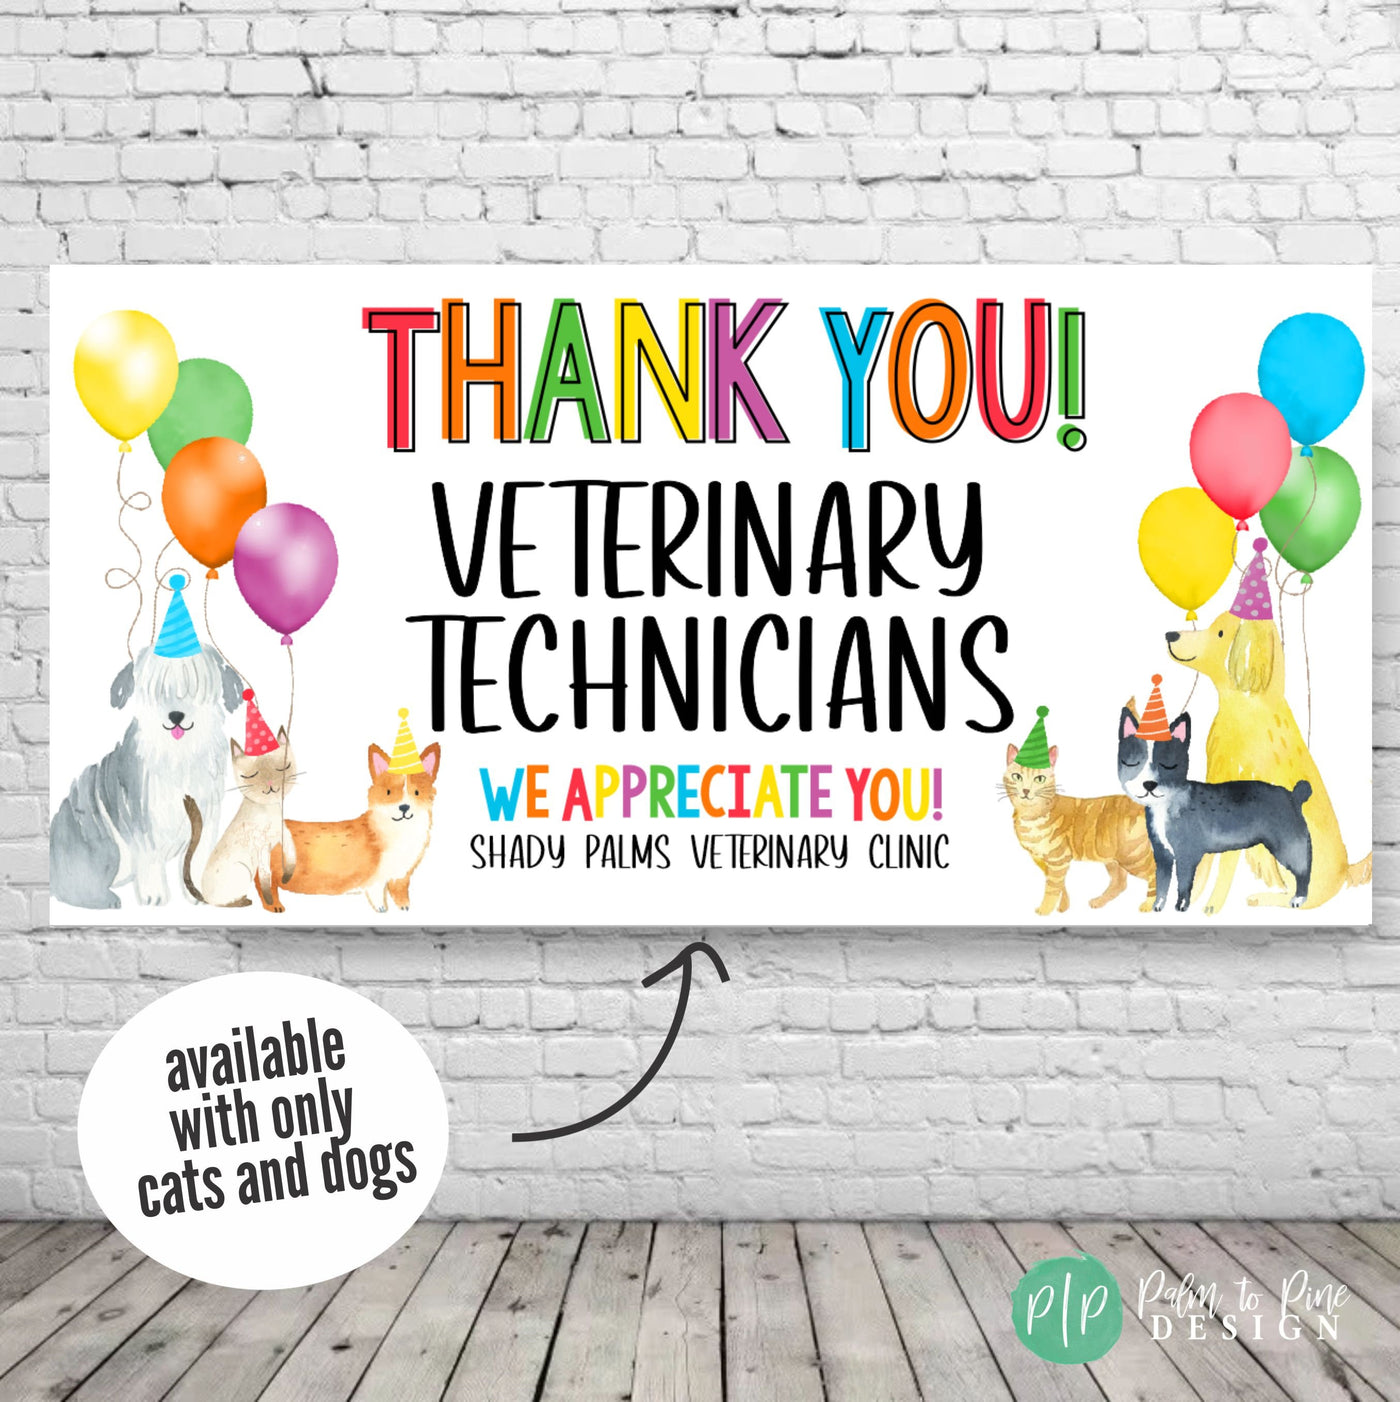 Veterinary Receptionist Week Banner, Veterinary Technician Week, Veterinary Appreciation Banner, Vet Tech Sign, Thank You Veterinarian Sign